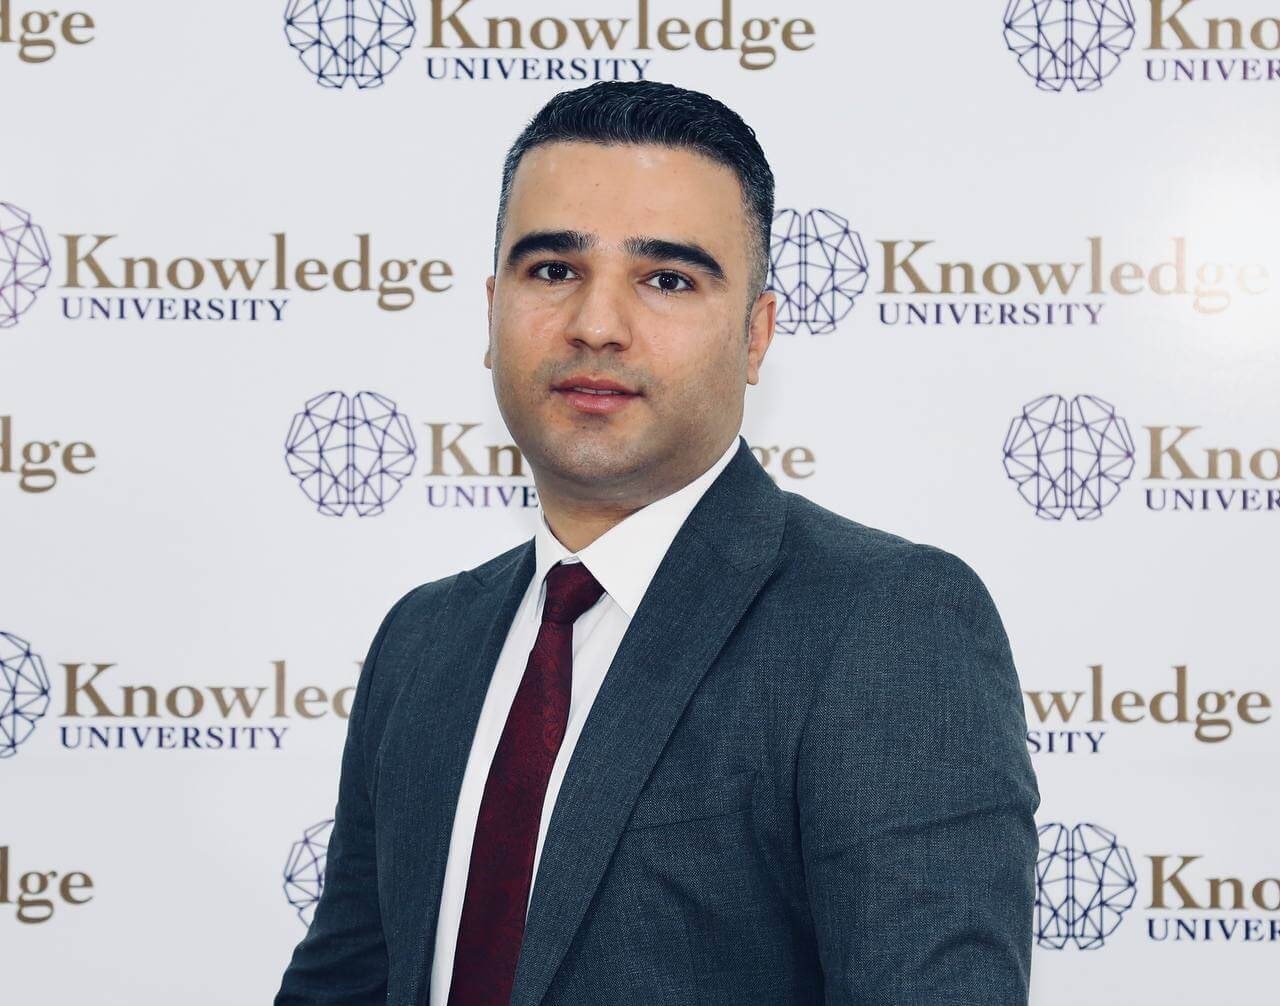 Bayar Gardi, Graduate Knowledge University